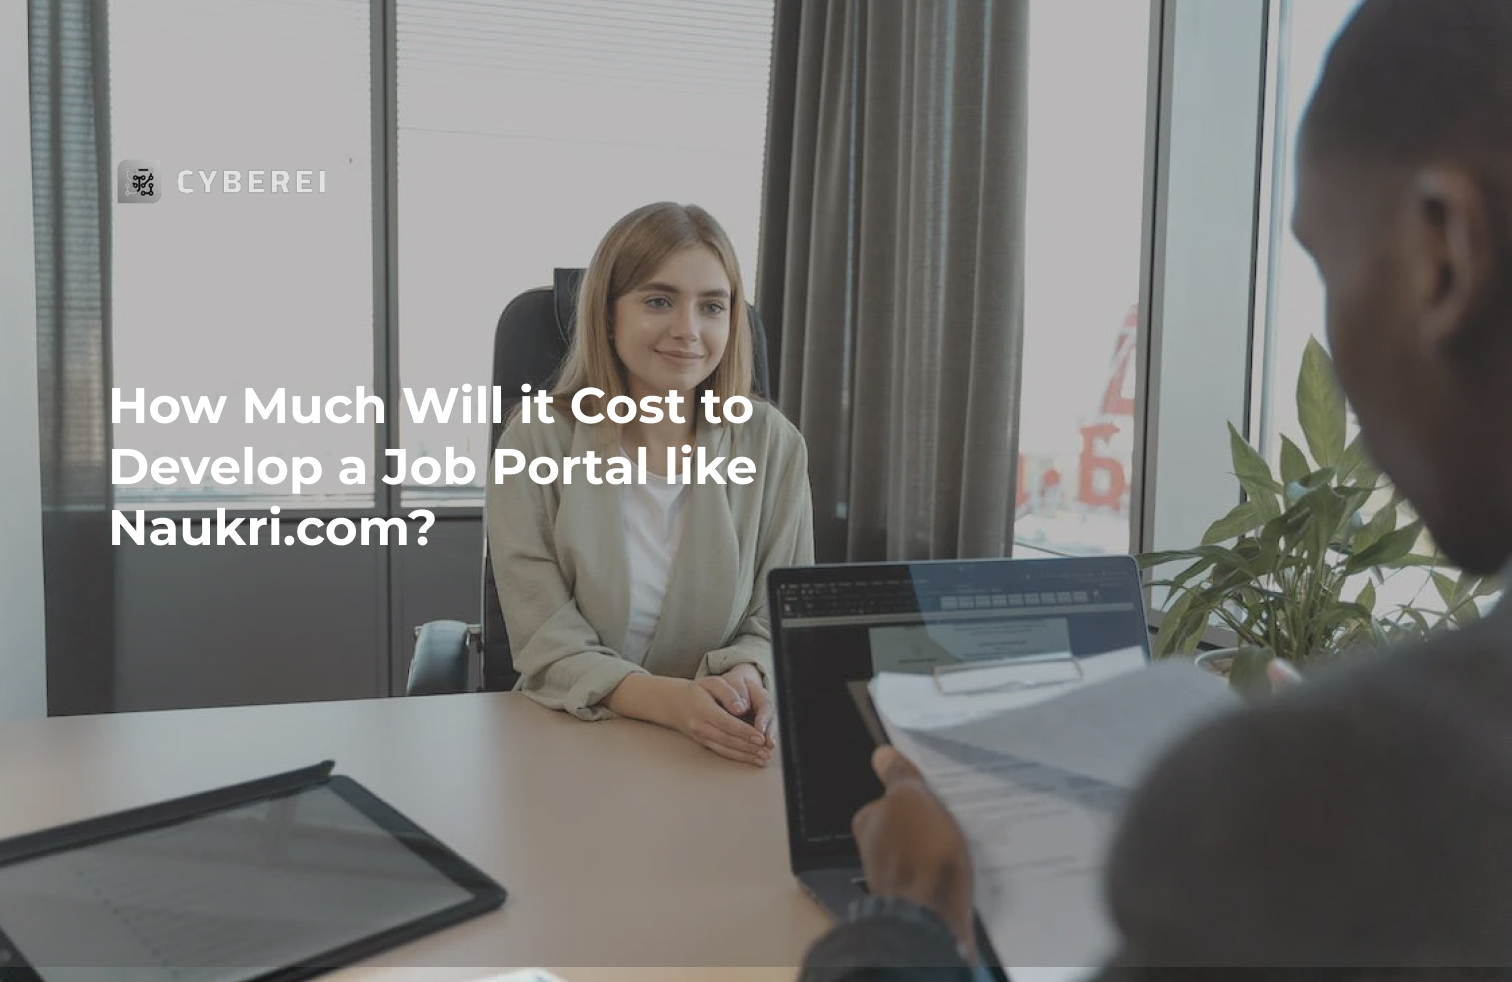 How Much Will it Cost to Develop a Job Portal like Naukri.com?